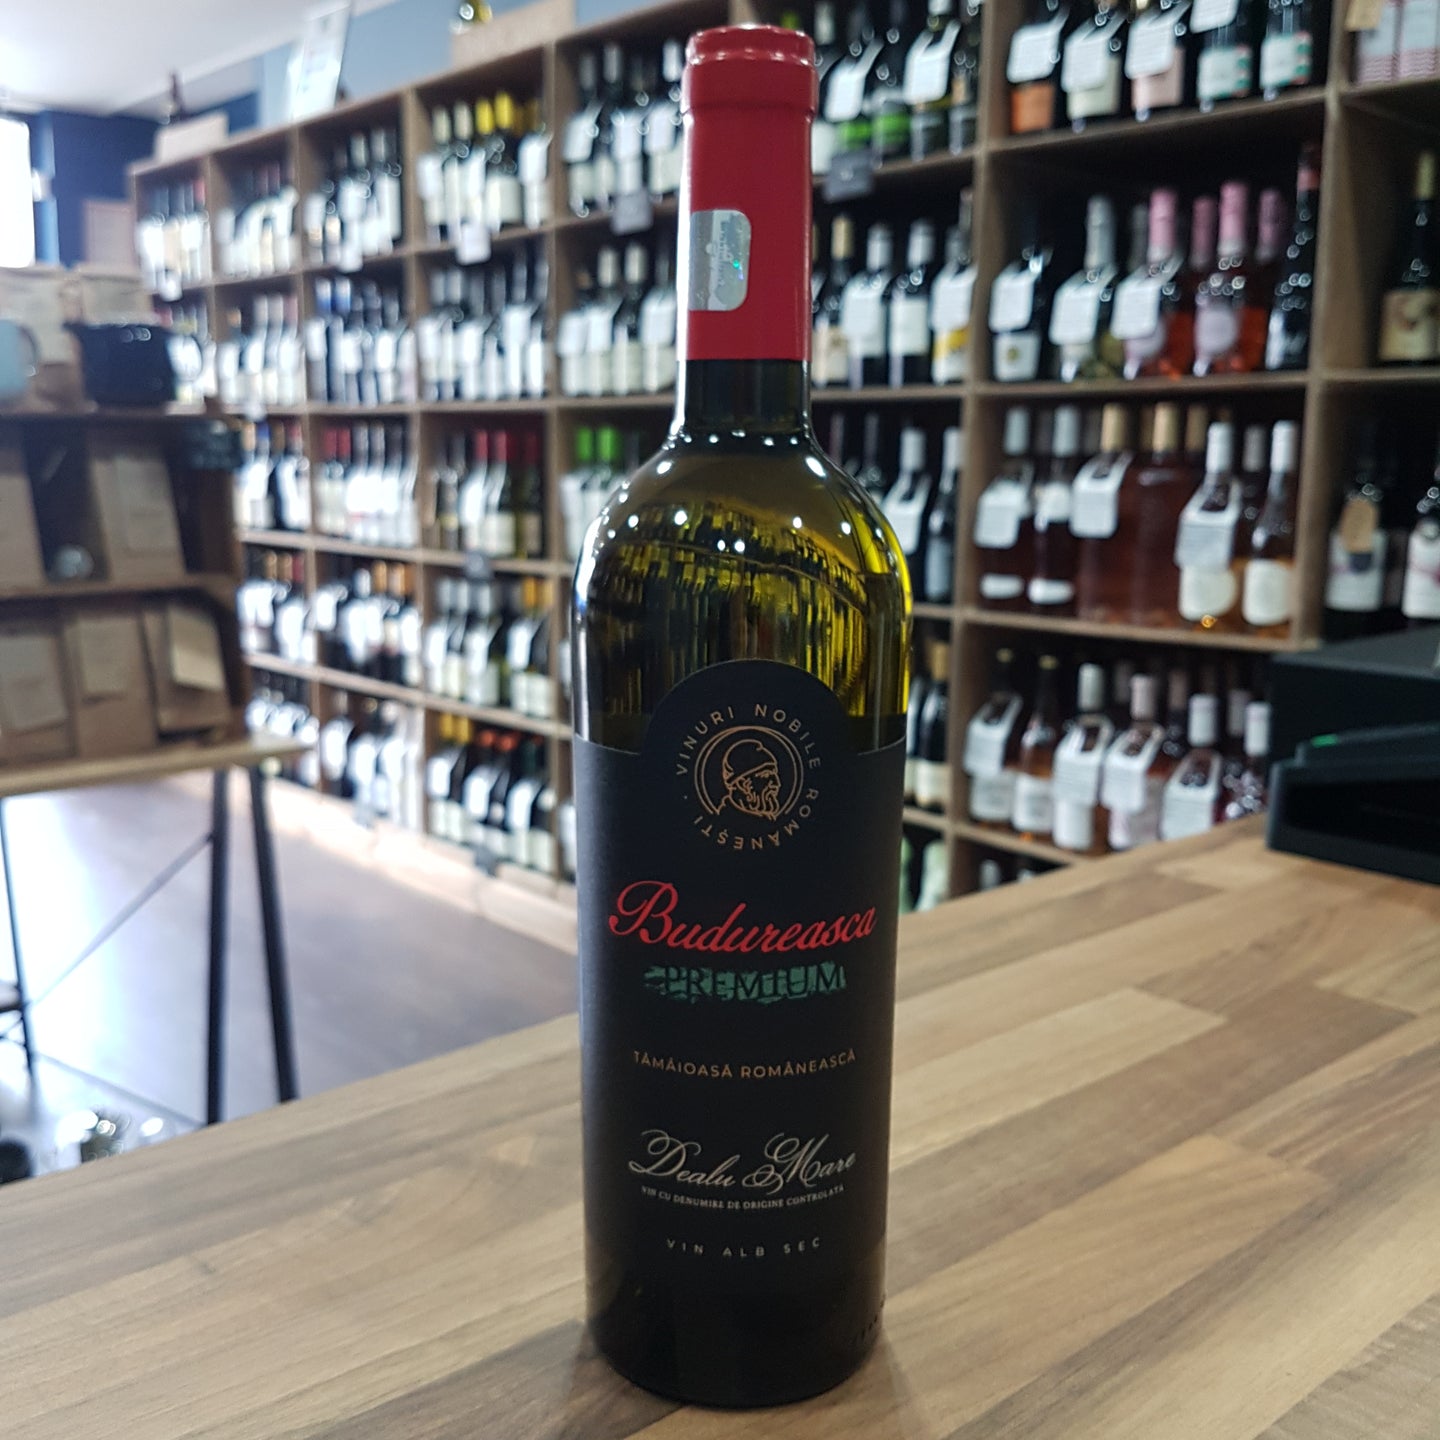 Budureasca Premium Tamaioasa Romaneasca 2019 Romanian White Wine